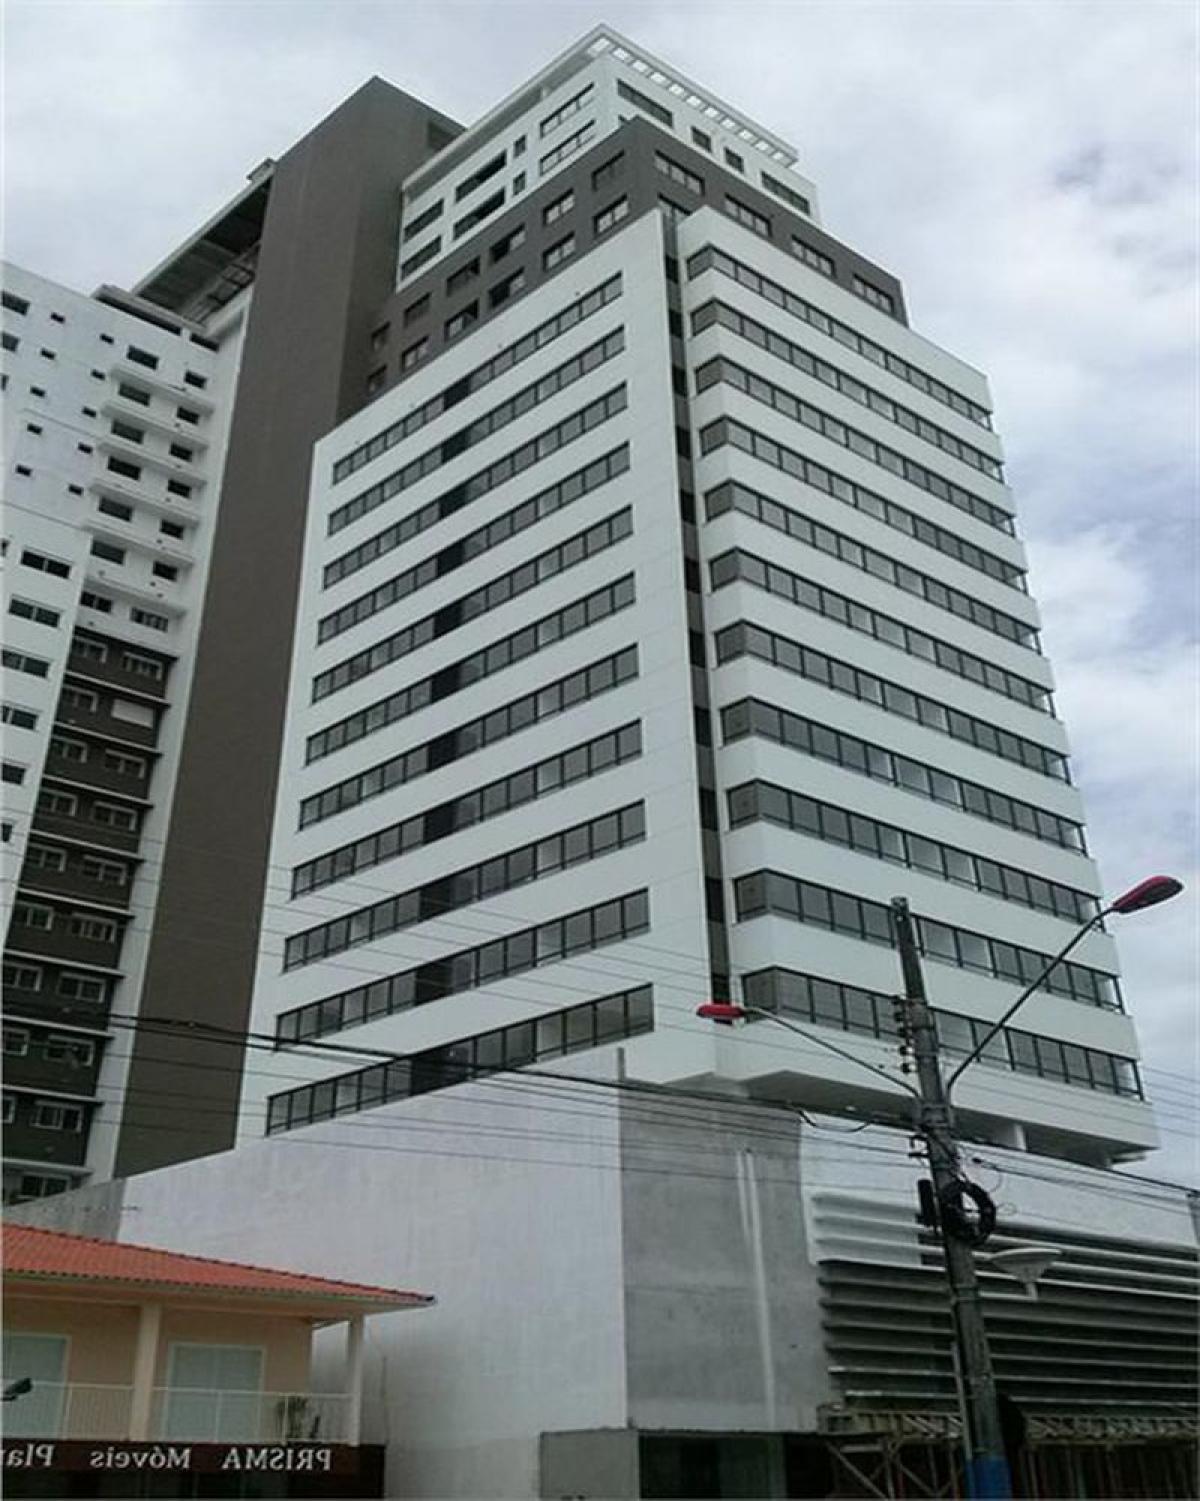 Picture of Commercial Building For Sale in Santa Catarina, Santa Catarina, Brazil